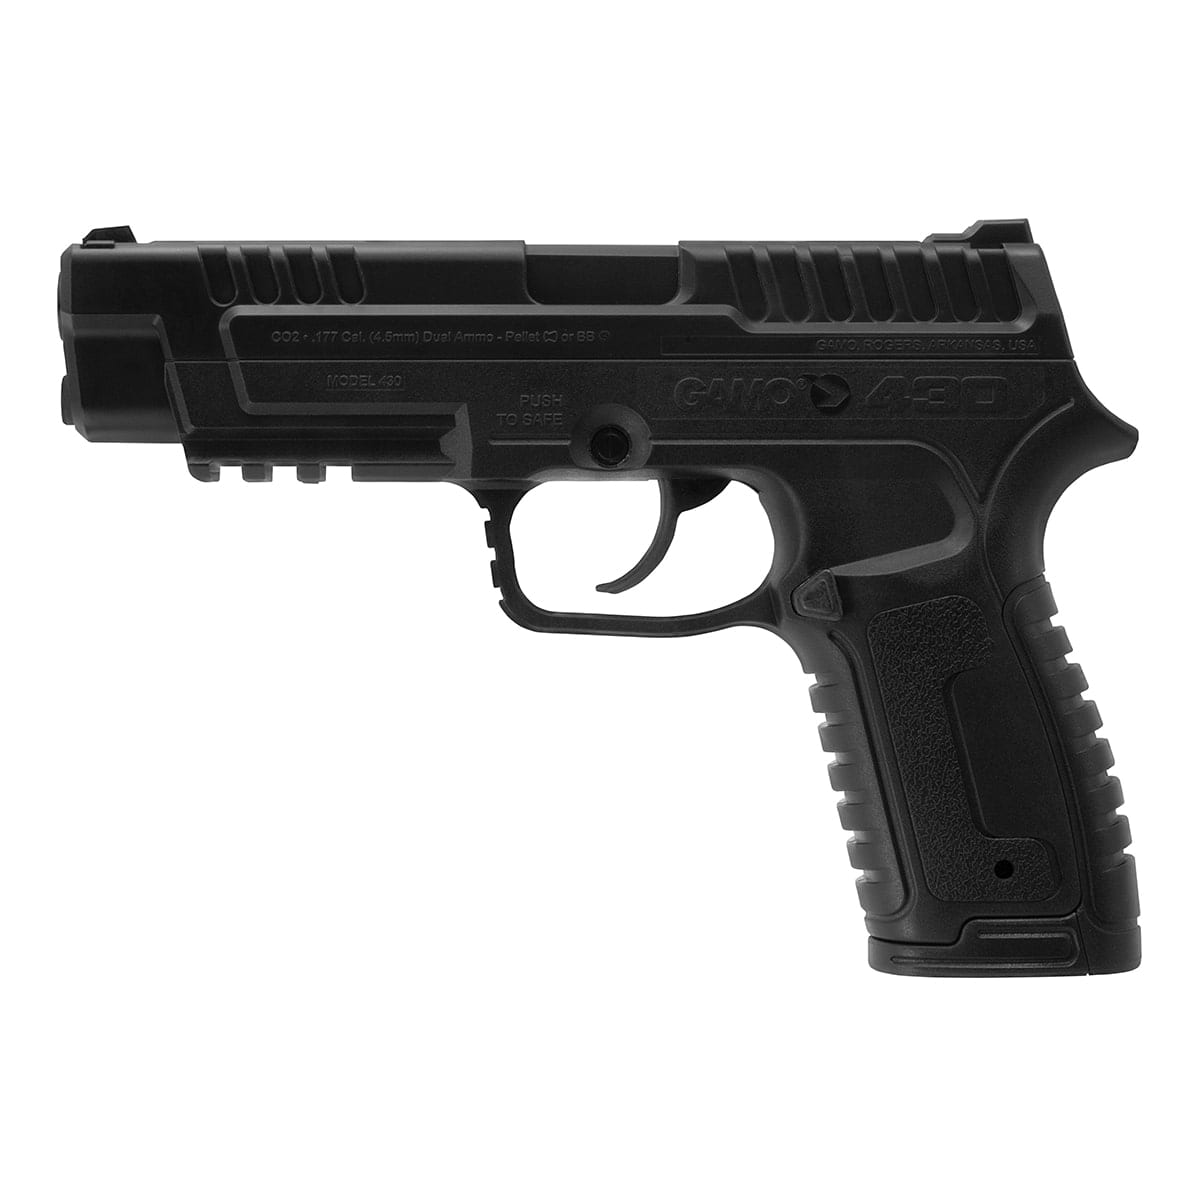 Pistola Beretta Elite II Calibre .177(4.5mm) Combo